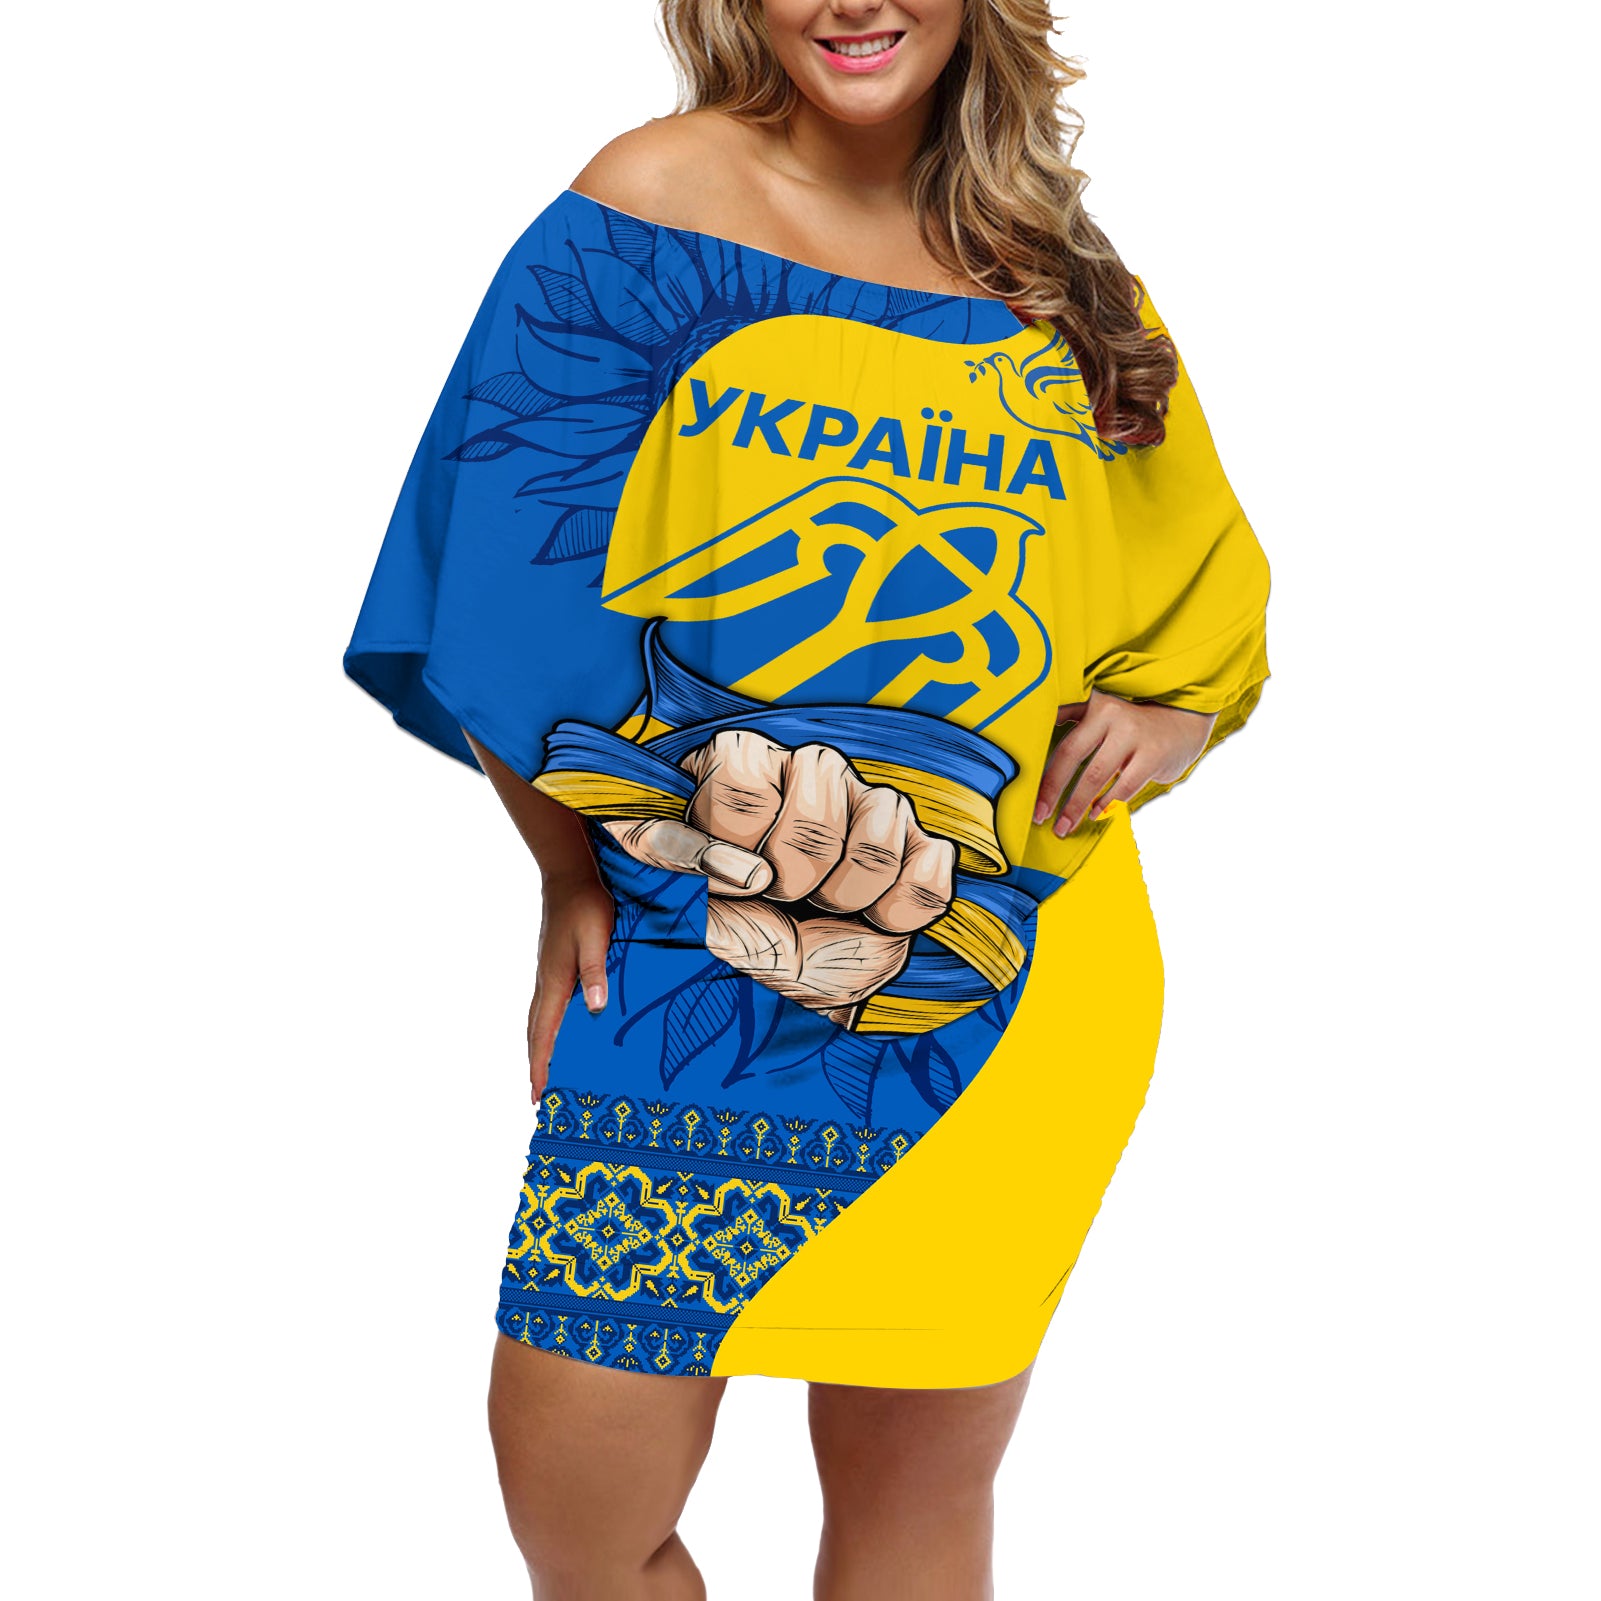 ukraine-ukraine-folk-patterns-unity-day-personalized-off-shoulder-short-dress